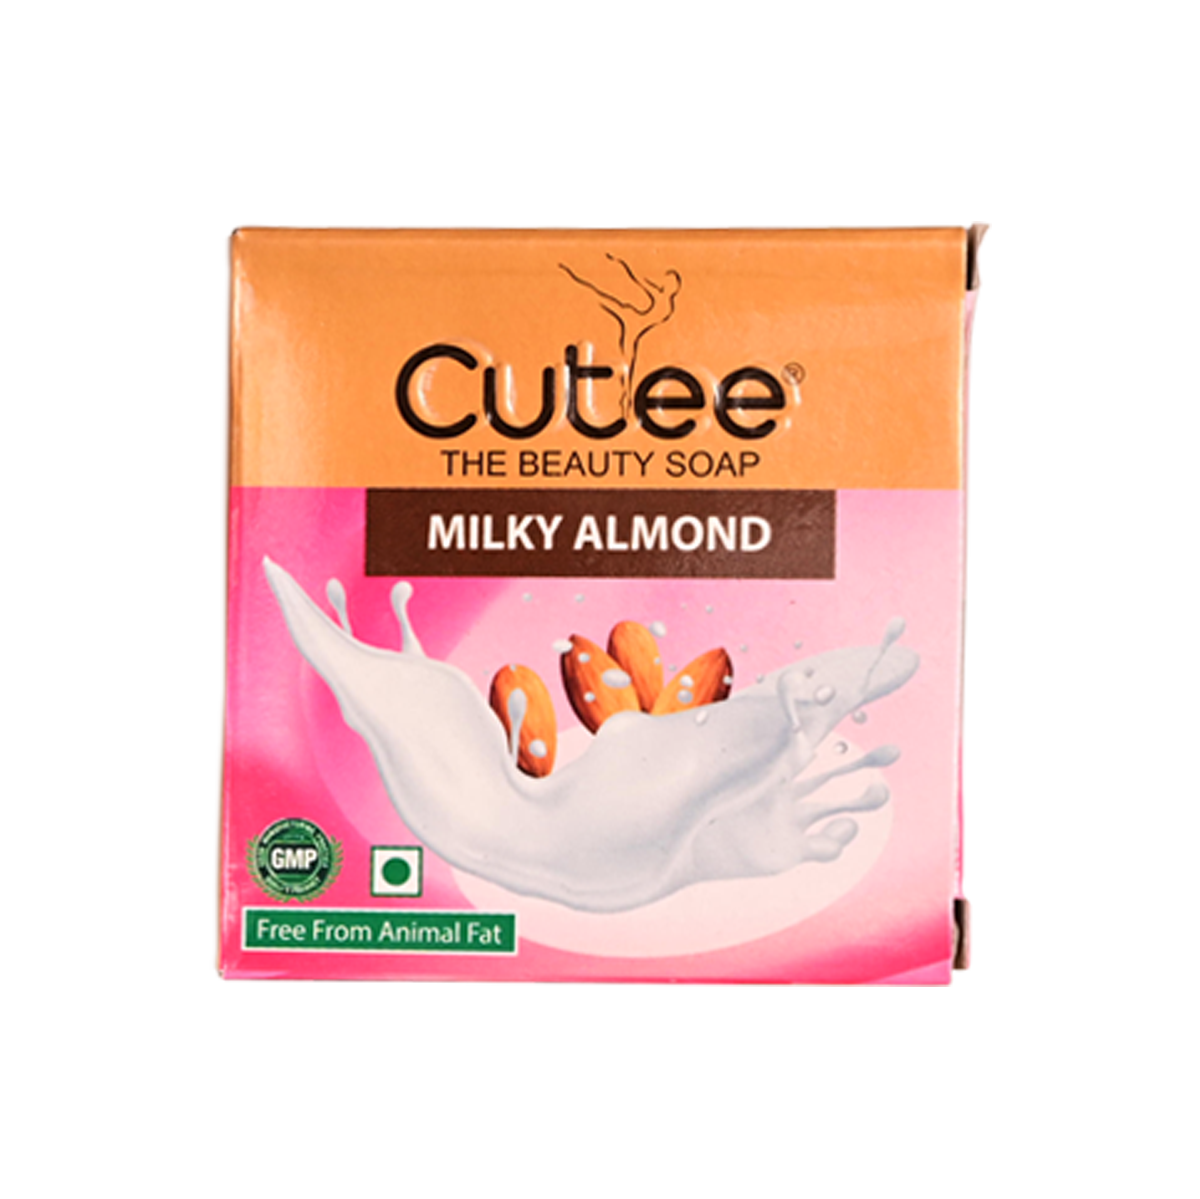 Cutee Milky Almond Soap